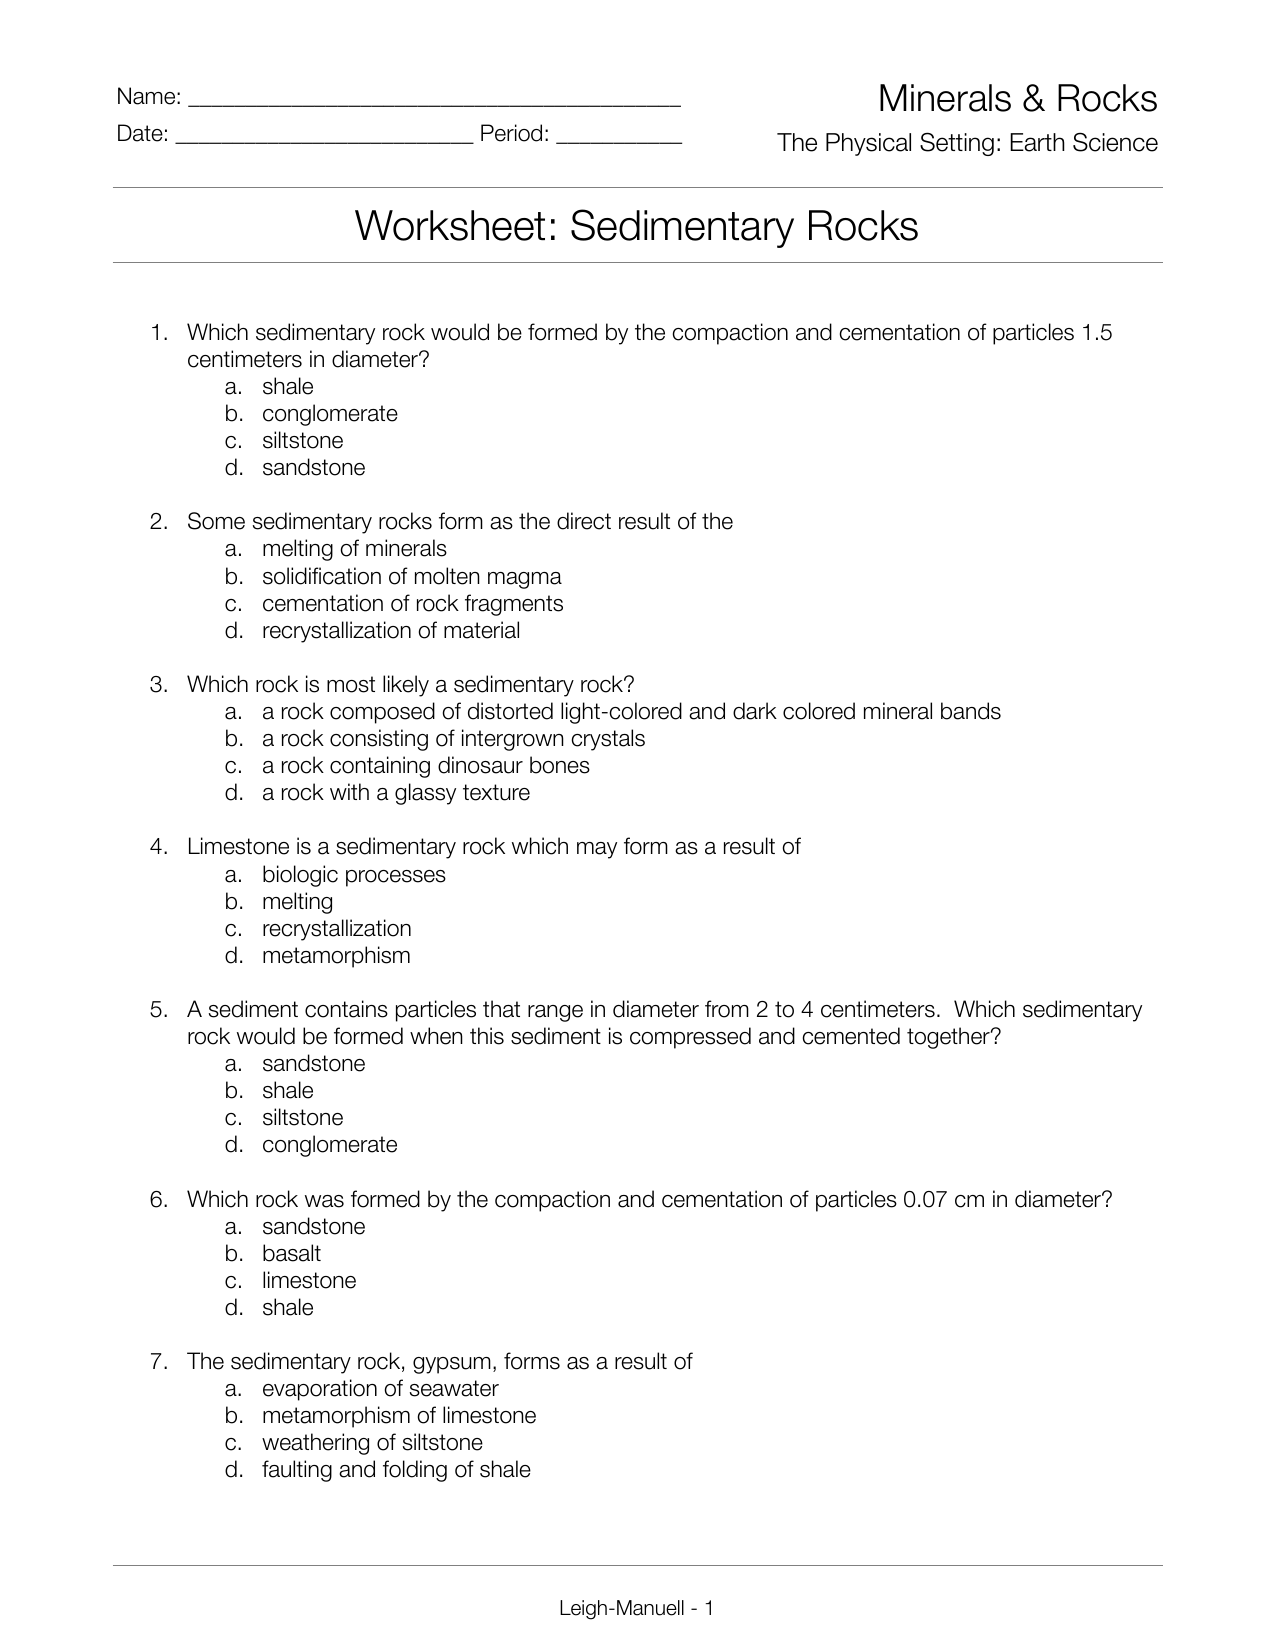 sedimentary-rocks-worksheet-answers-worksheet-list